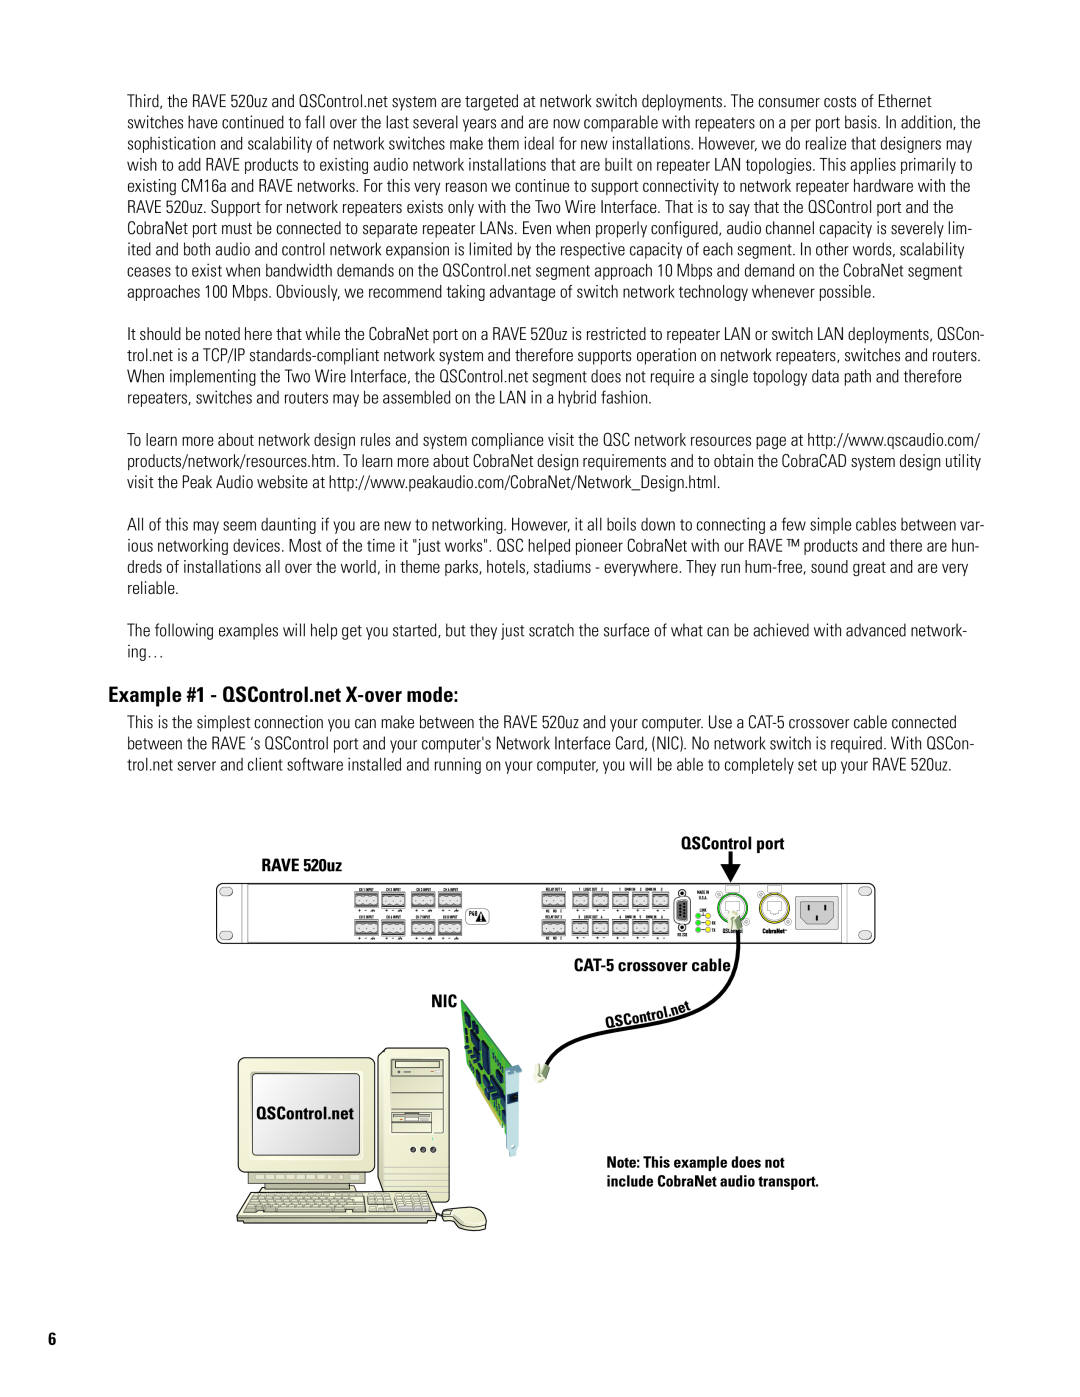 QSC Audio RAVE 520uz manual Example #1 - QSControl.net X-overmode 